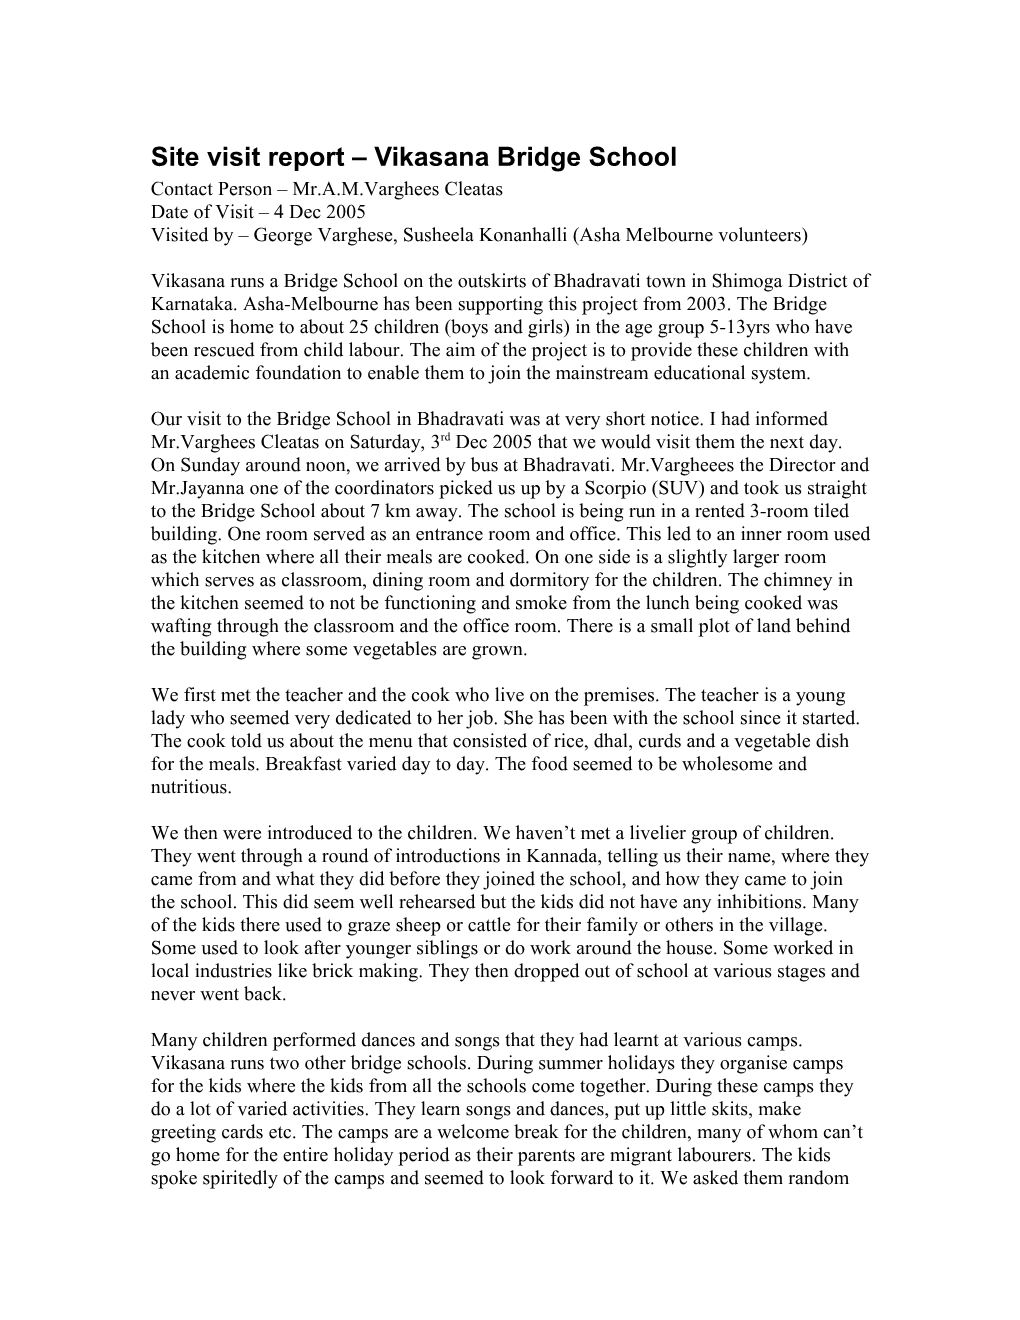 Site Visit Report Vikasana Bridge School